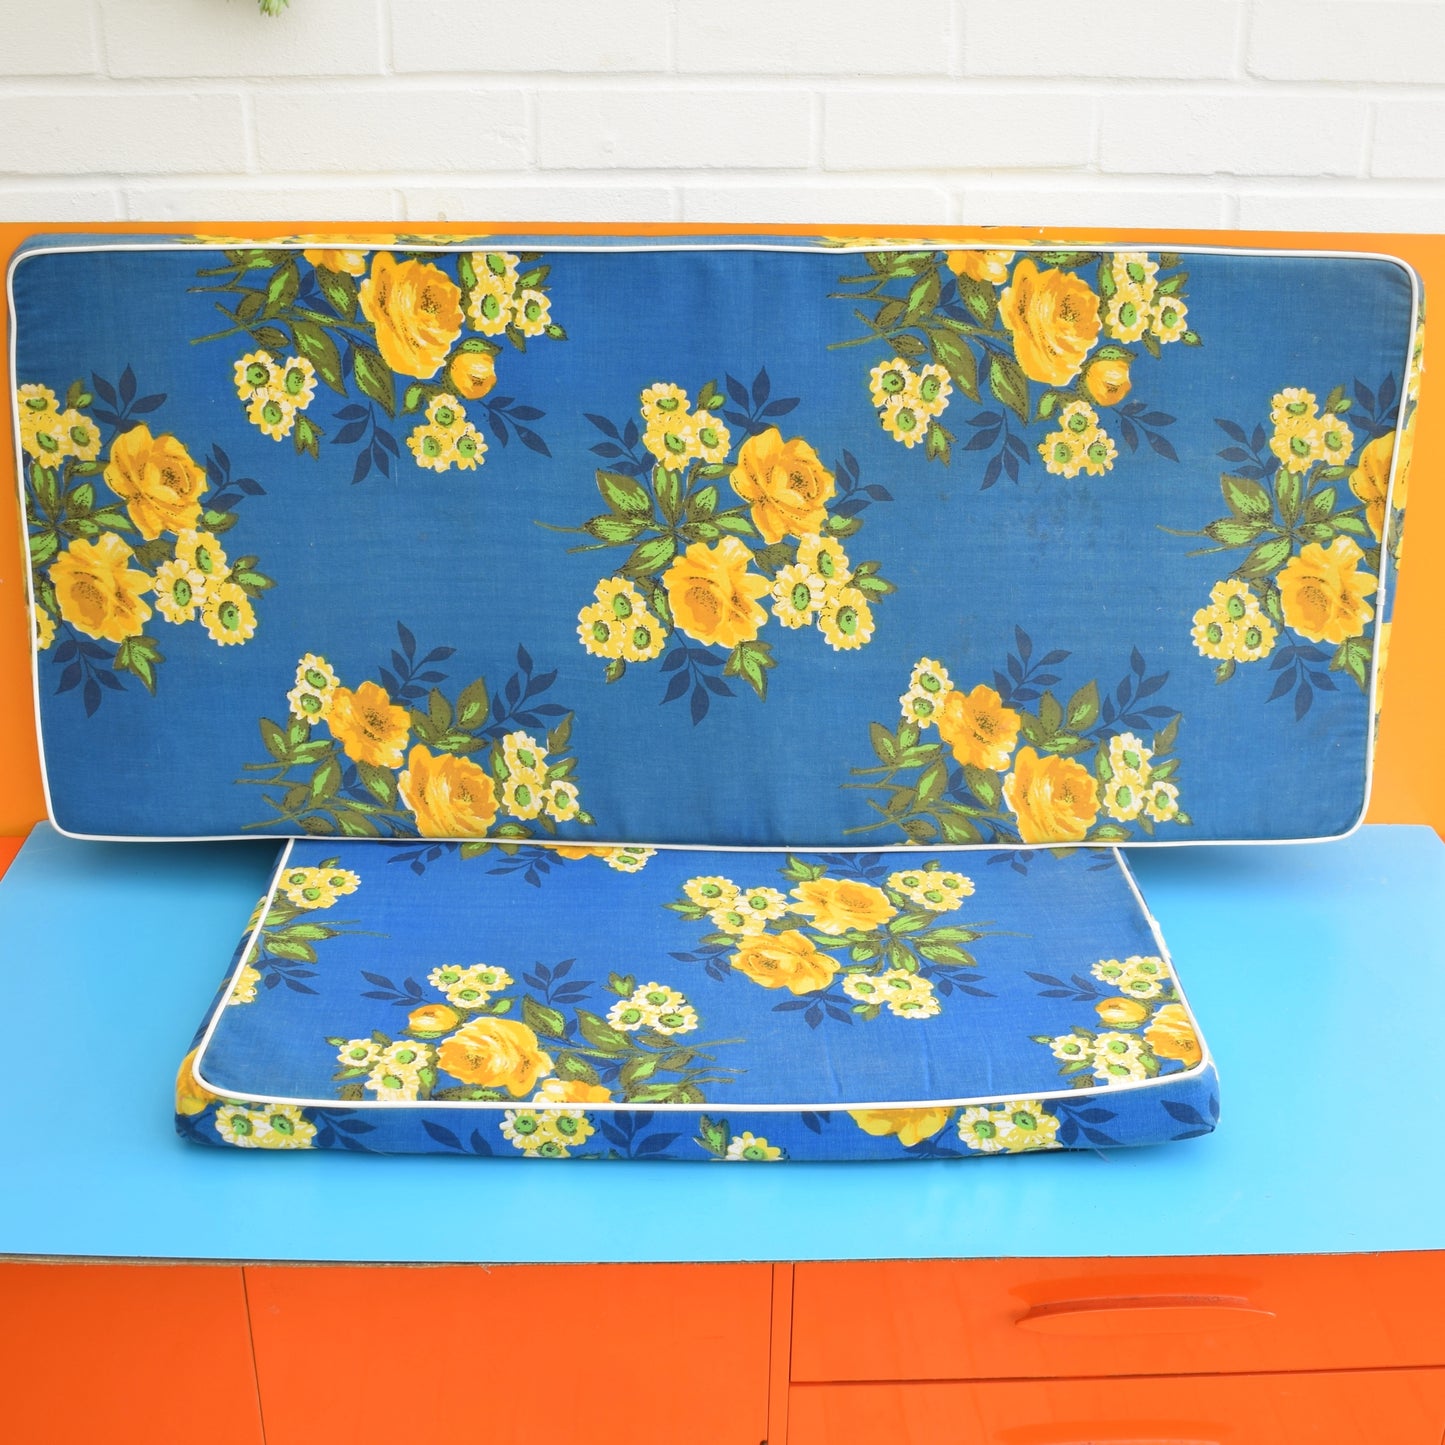 Vintage 1970s Garden Cushions / Mats -Blue & Yellow